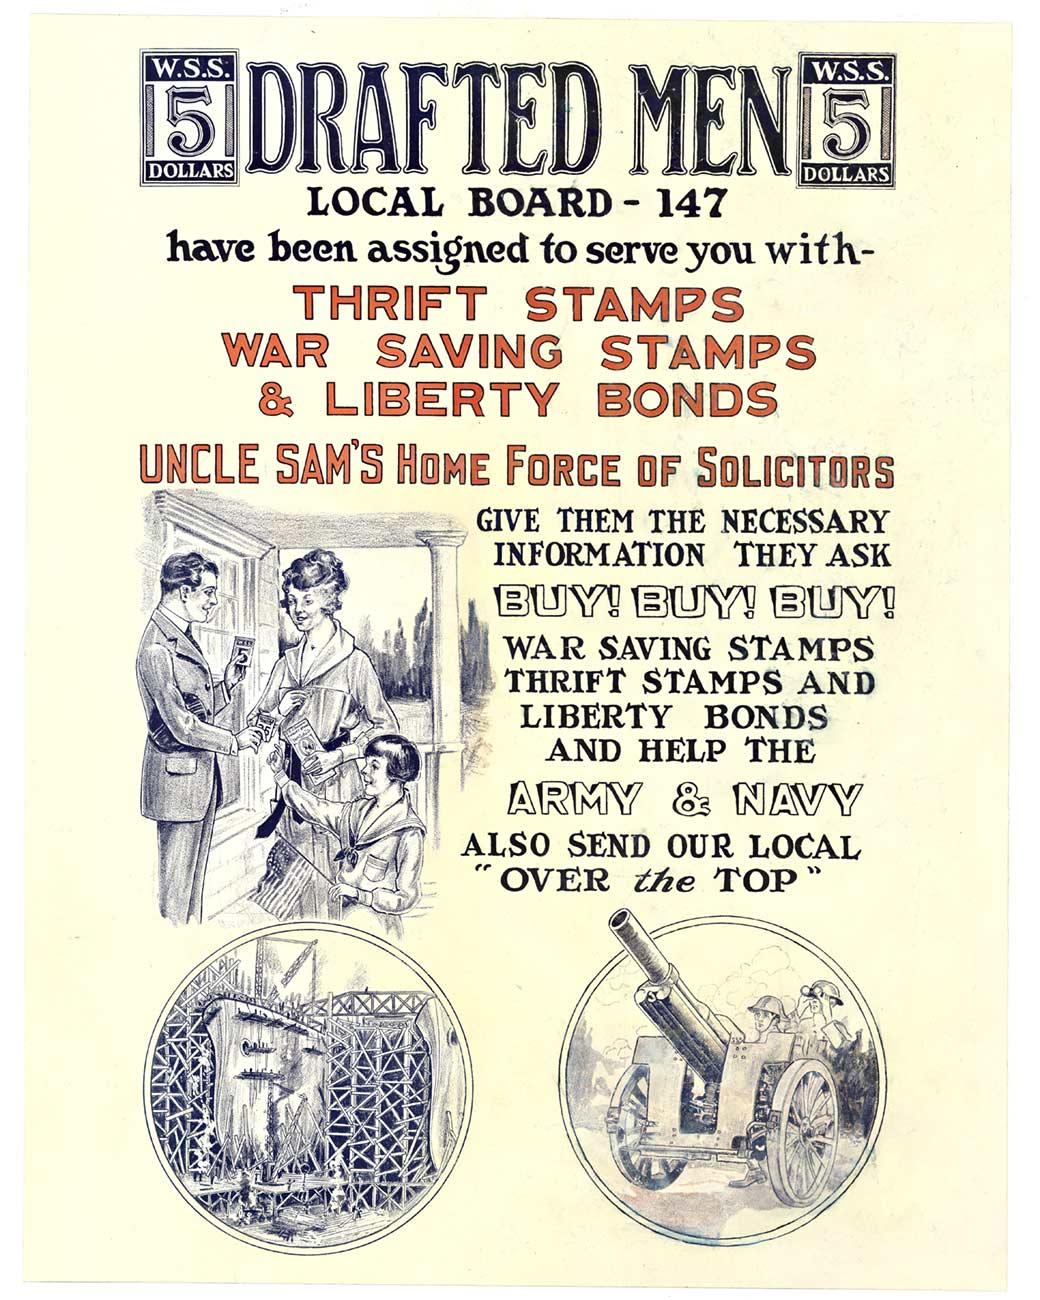 Original "Drafted Men, War Savings Stamps 5 Dollars" vintage American poster